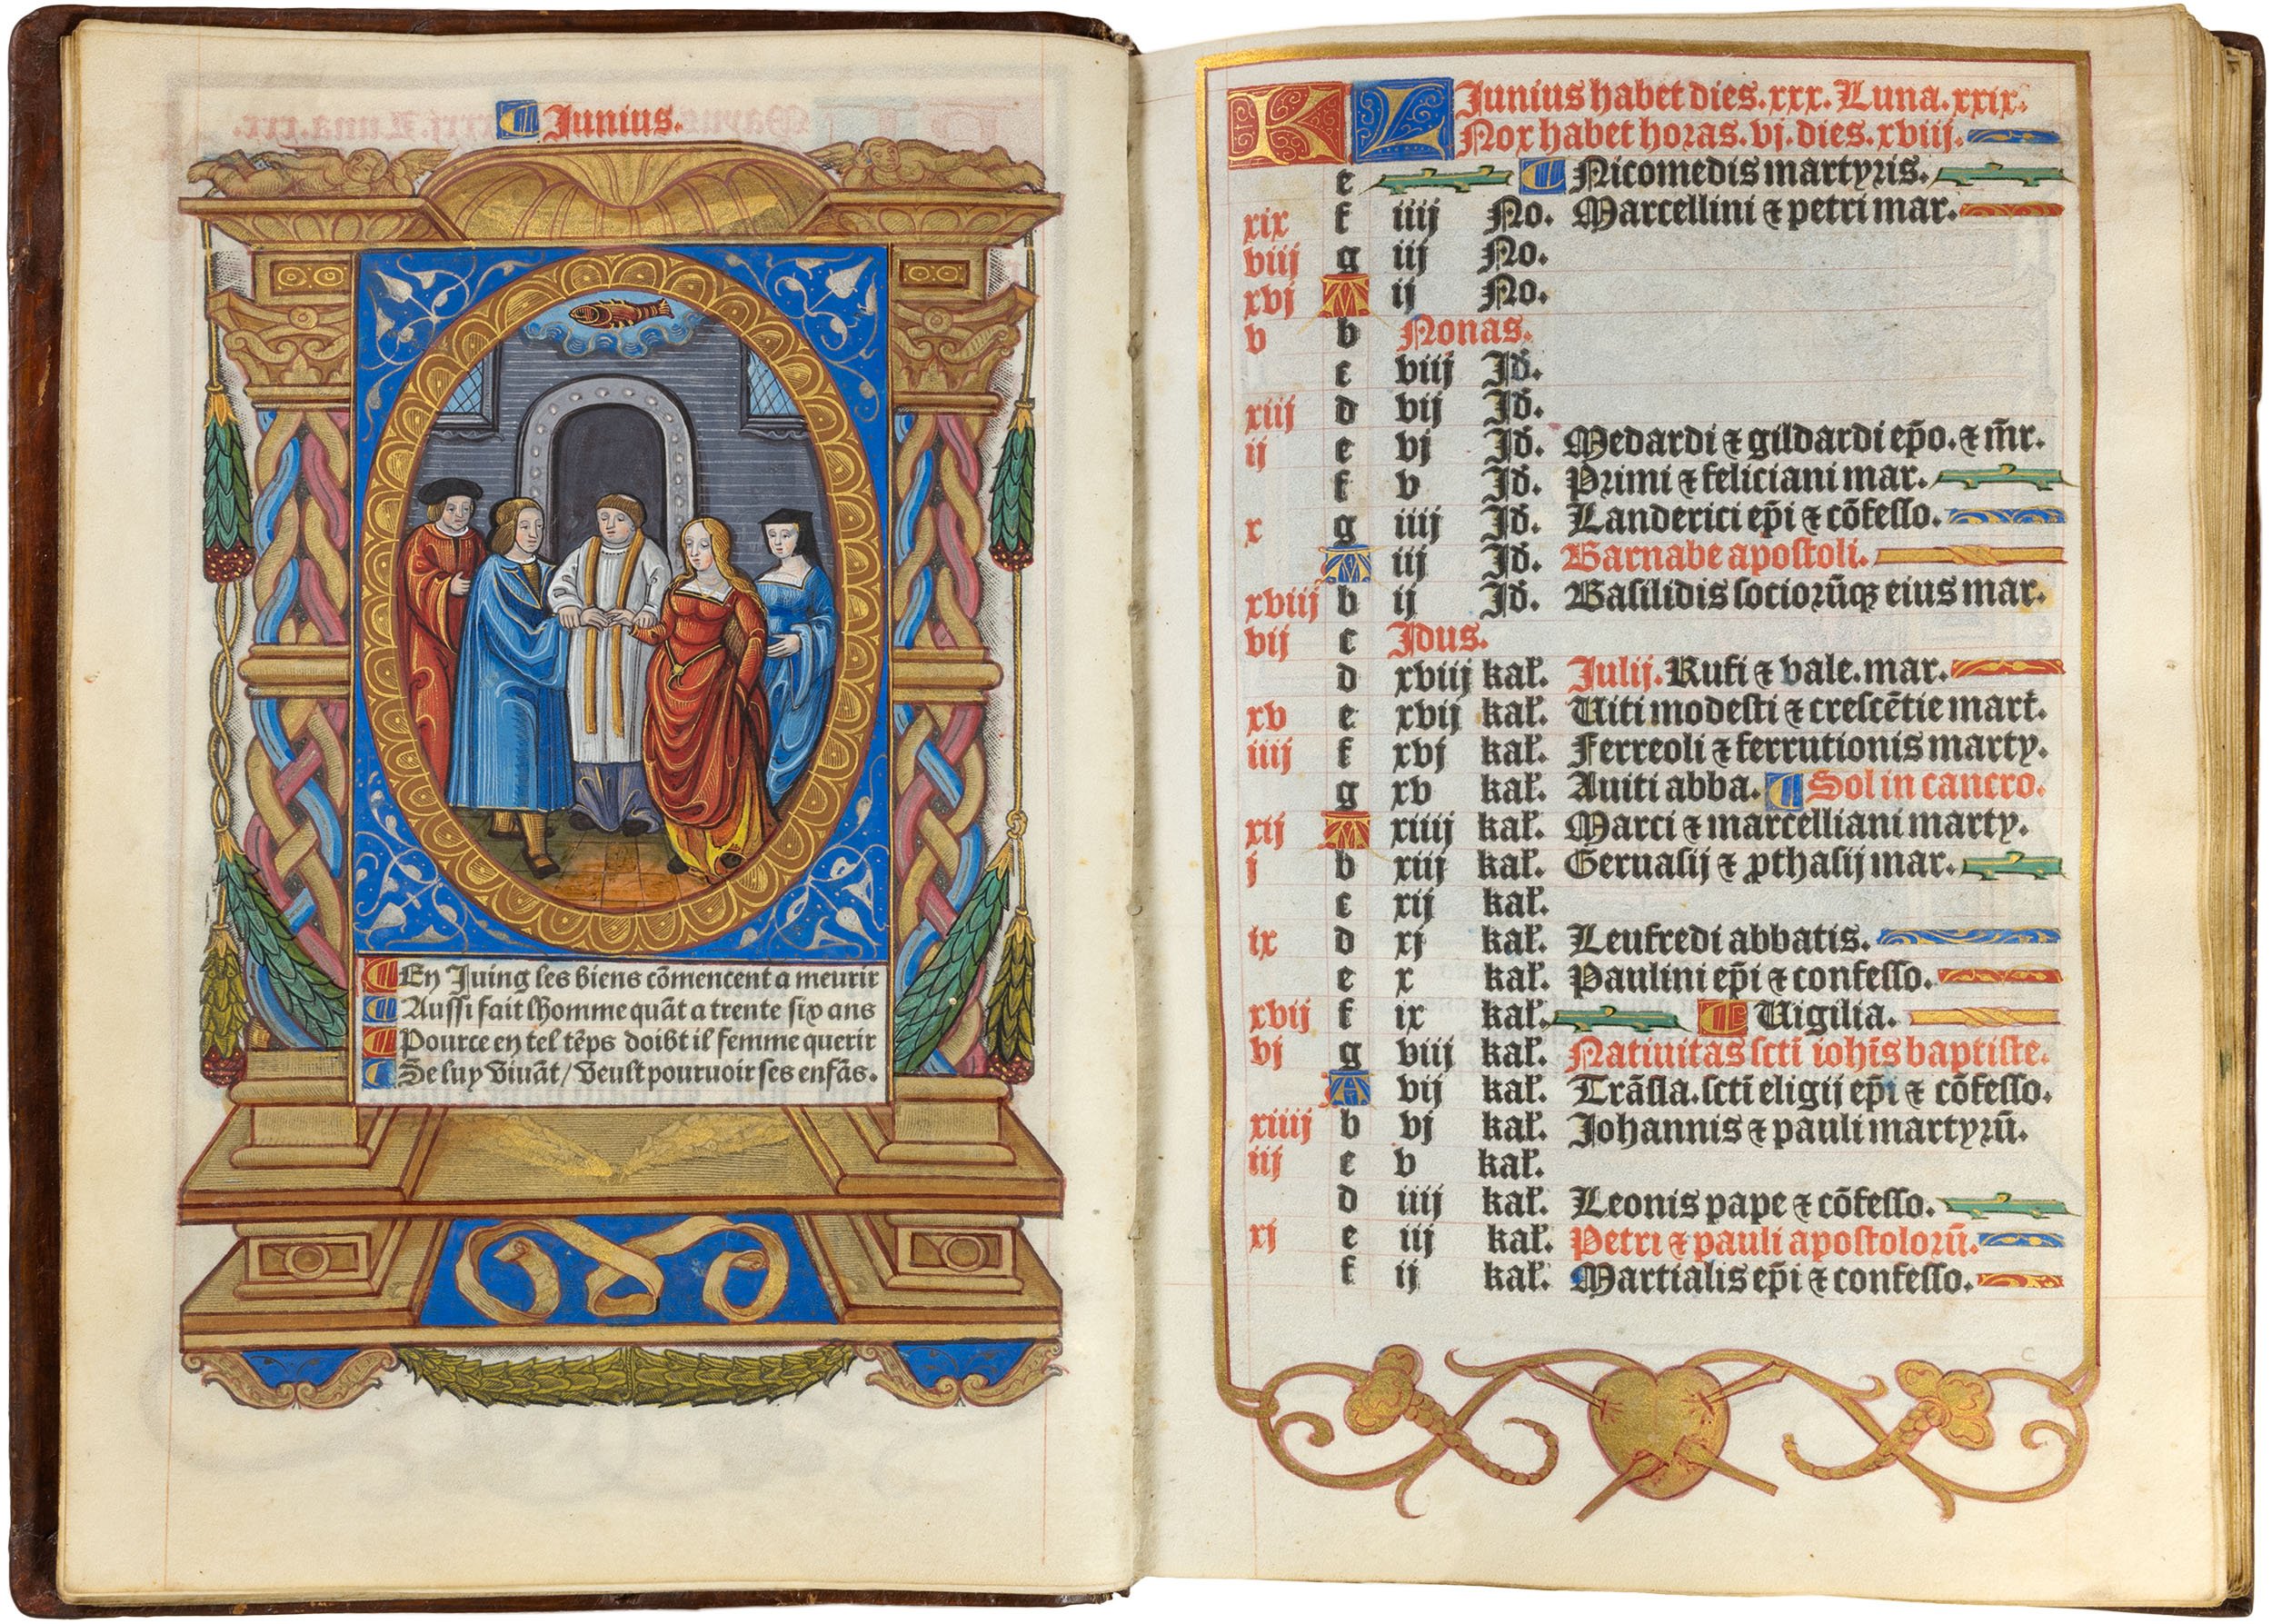 Printed-Book-of-hours-Anne-de-Montmorency-16-february-1523-kerver-yolande-bonhomme-illuminated-vellum-copy-10.jpg